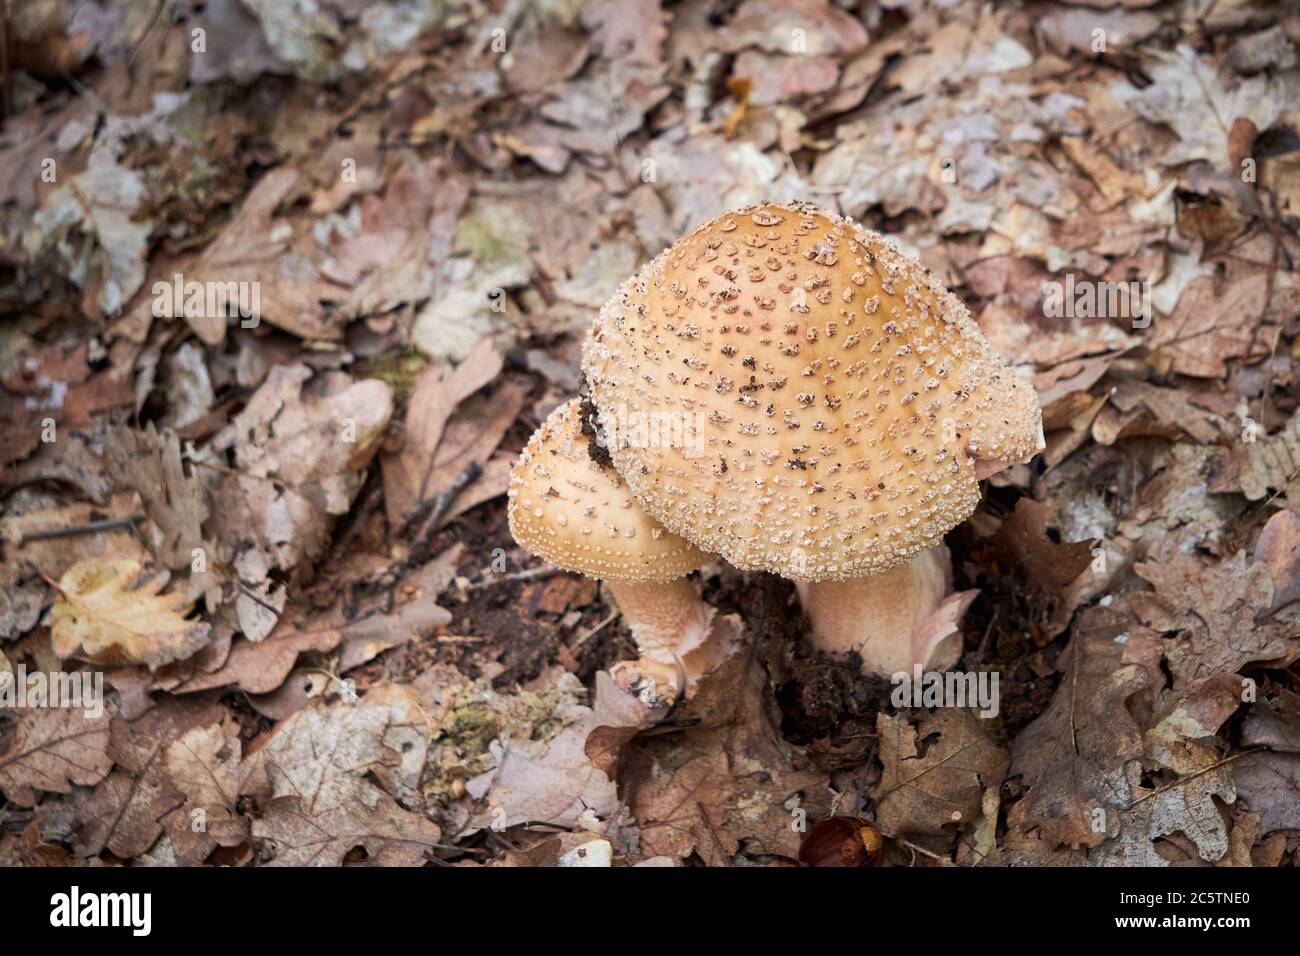 Blusher mushrooms (Amanita rubescens), Edible Mushrooms Stock Photo